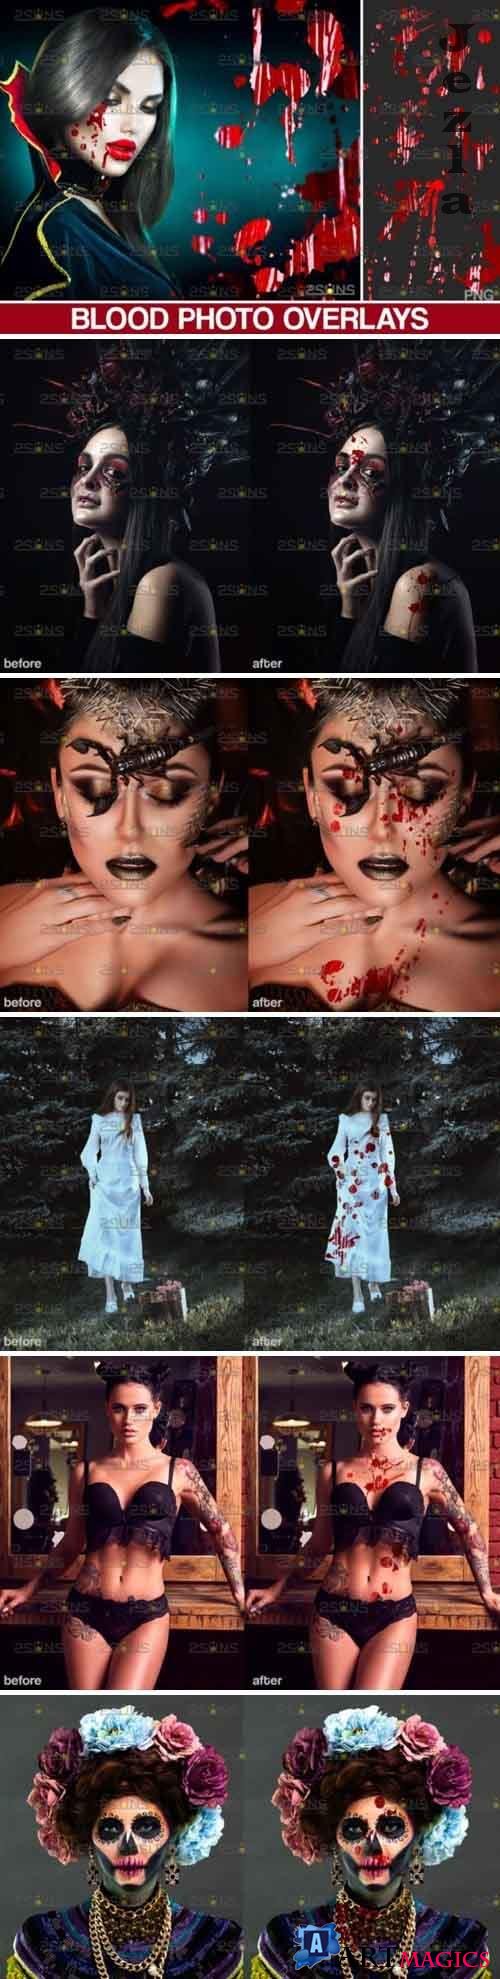 Blood splatter photoshop overlay, Halloween png overlays  - 840471